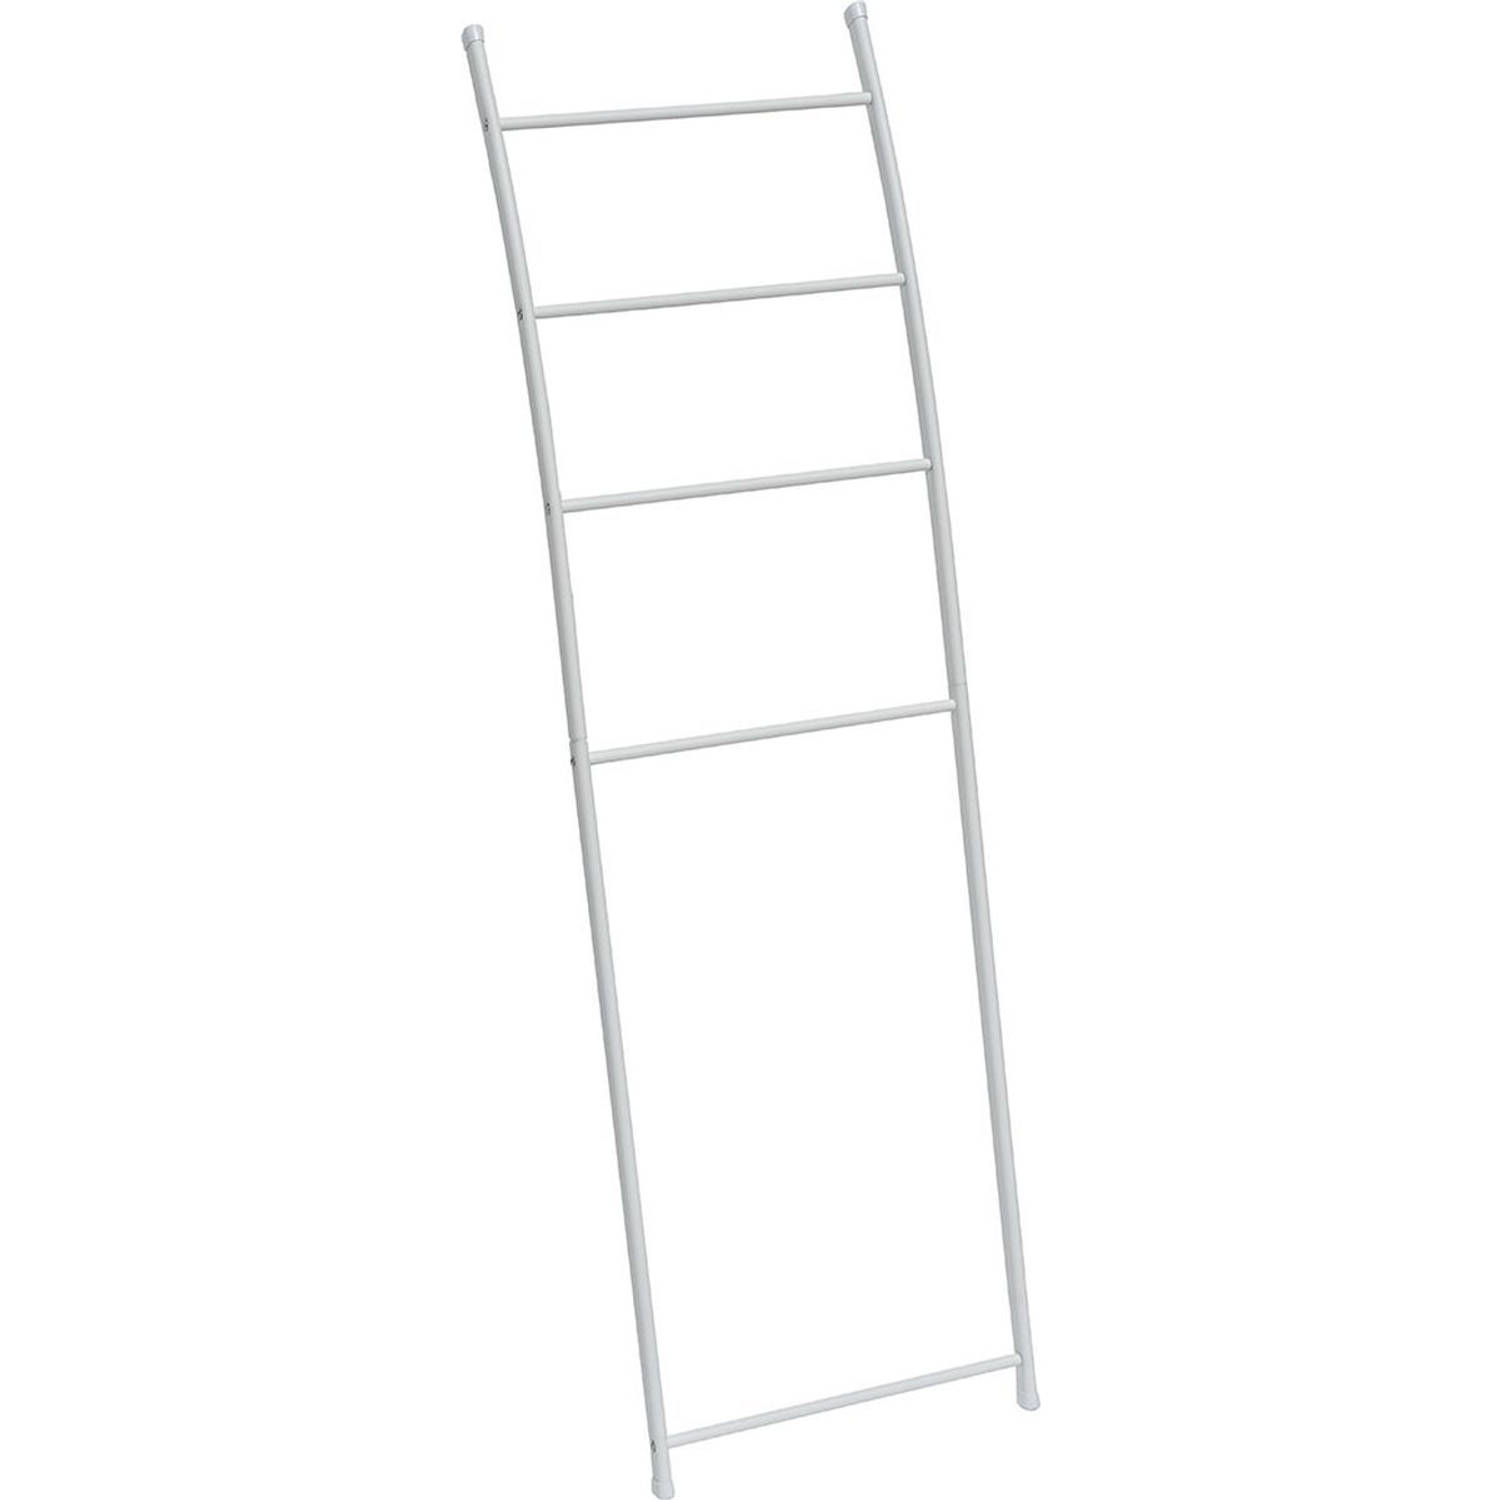 Gebor - Design Laddervormige Handdoekenrek Met 4 Rails - Metaal - Wit - 150x44x10cm - Bamboe - Handdoekenrek -